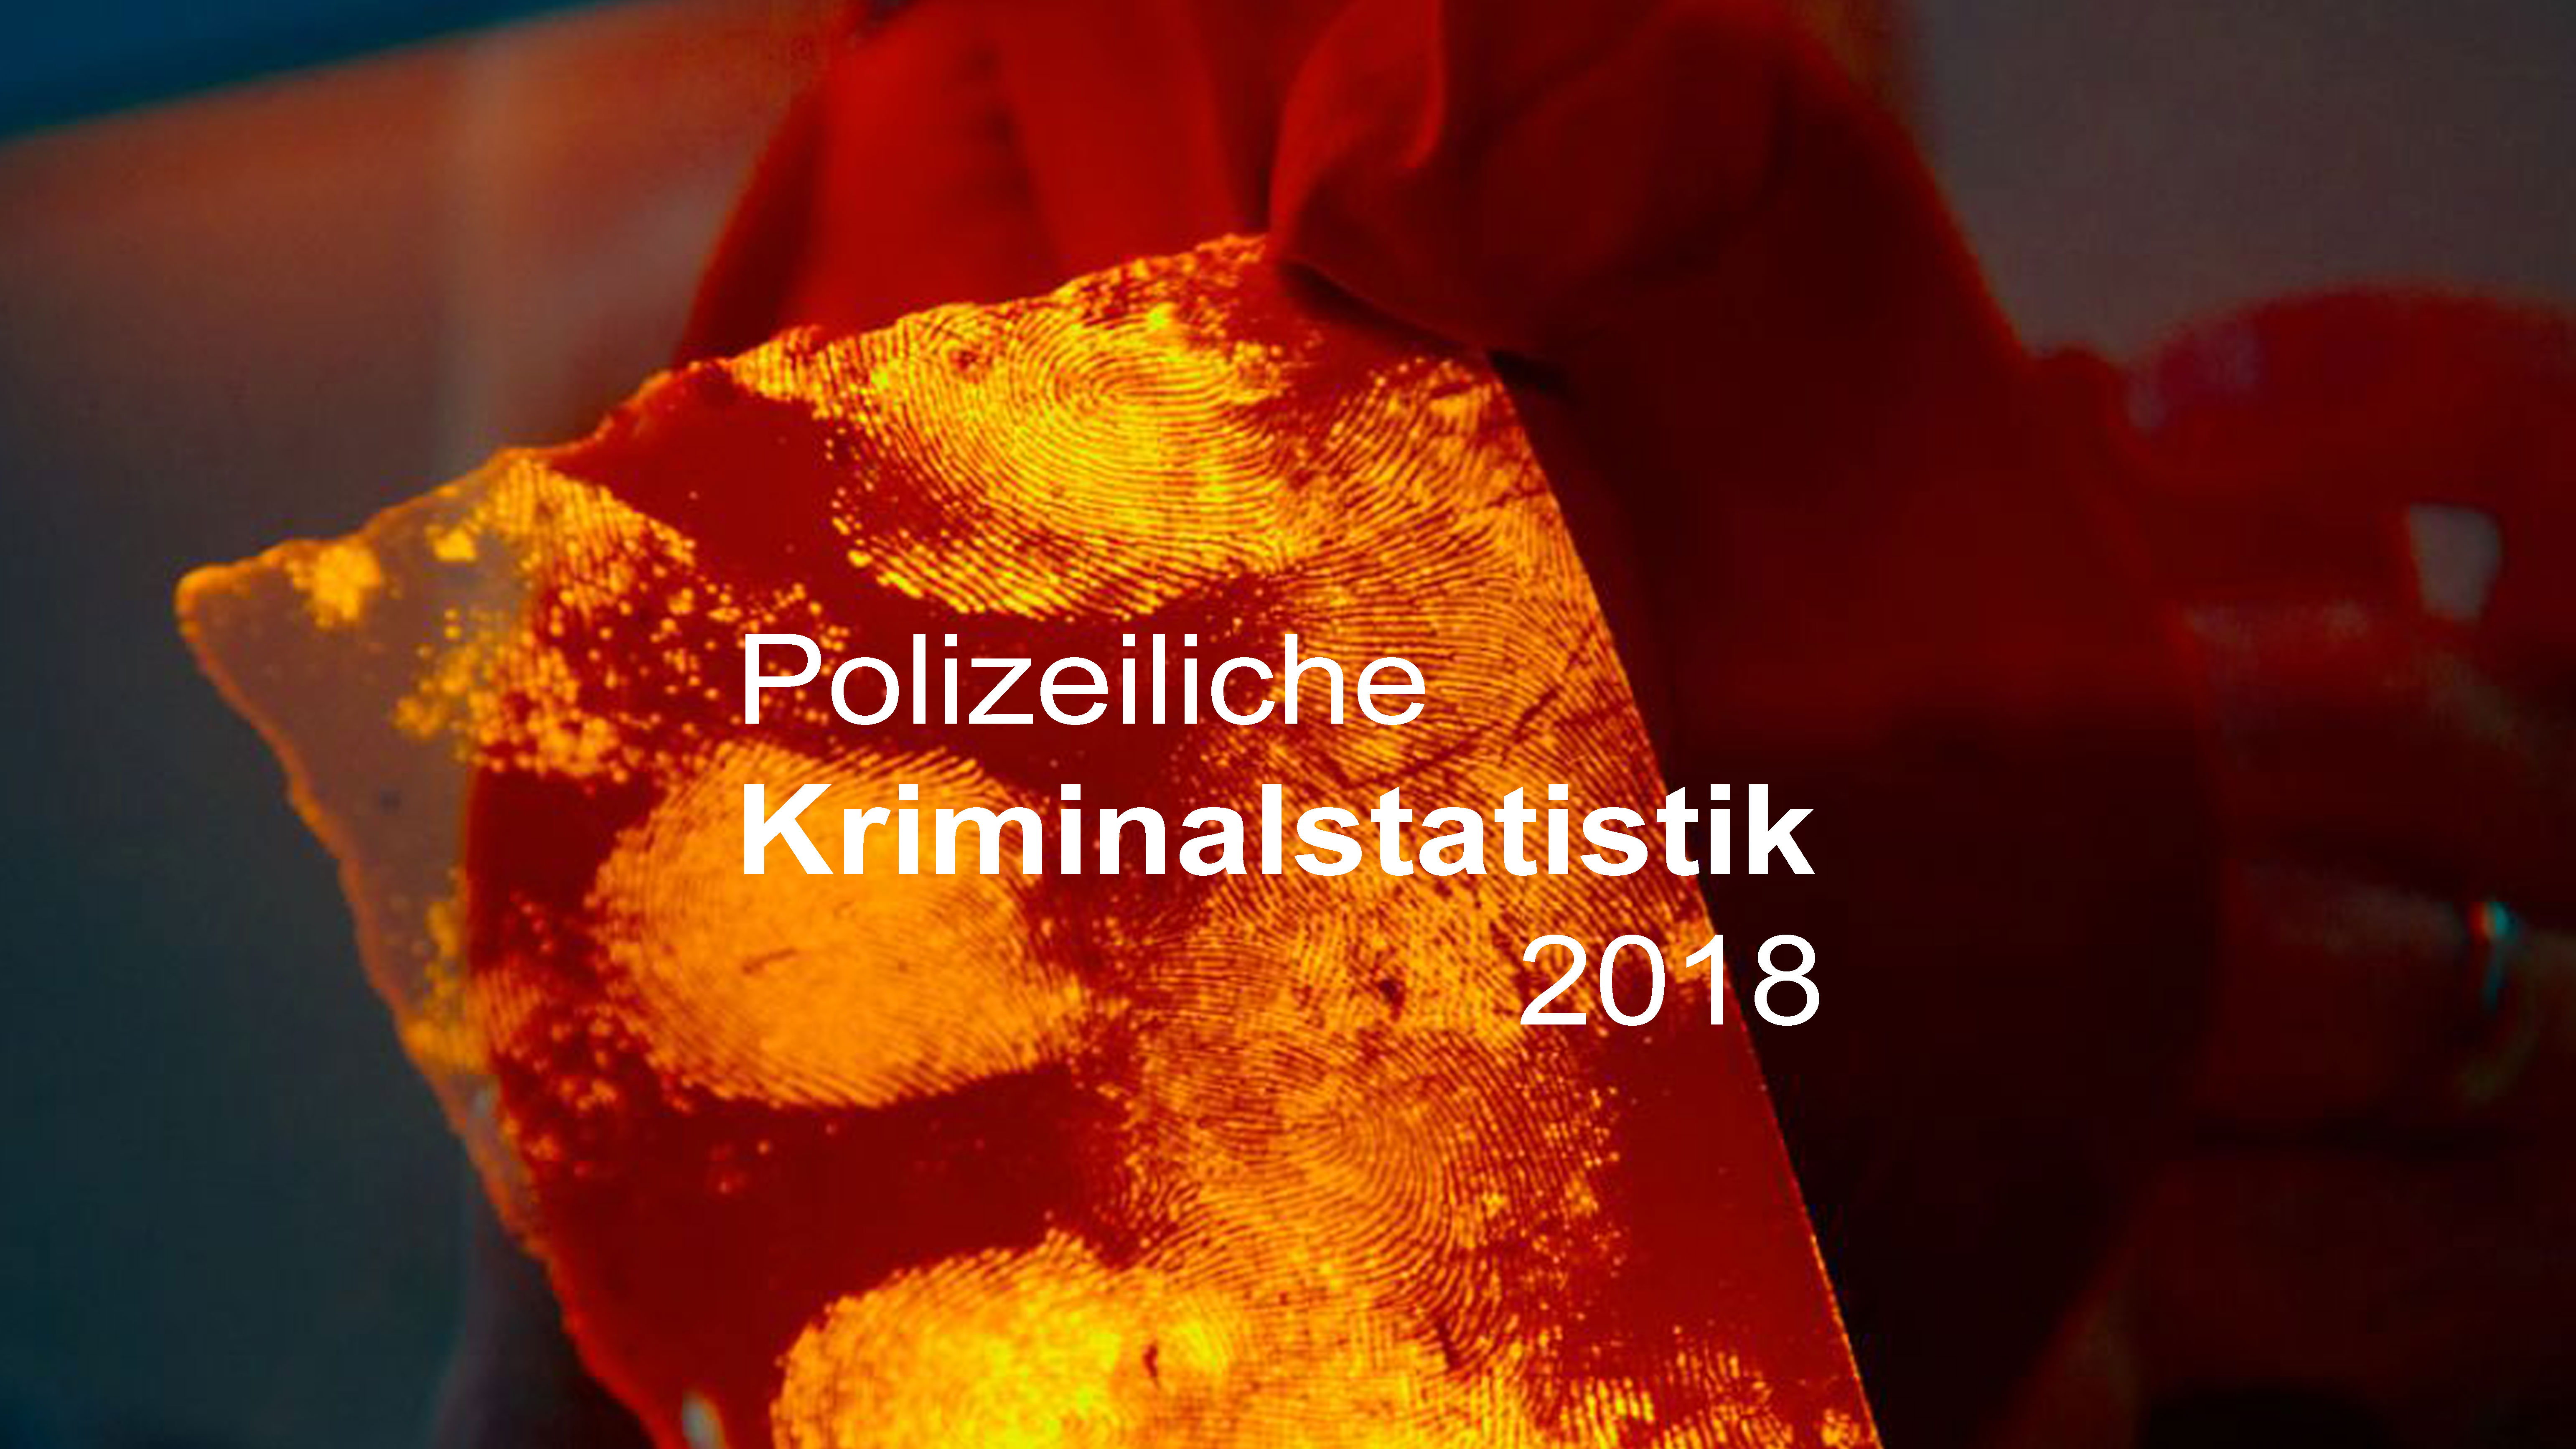 Police crime statistics 2018